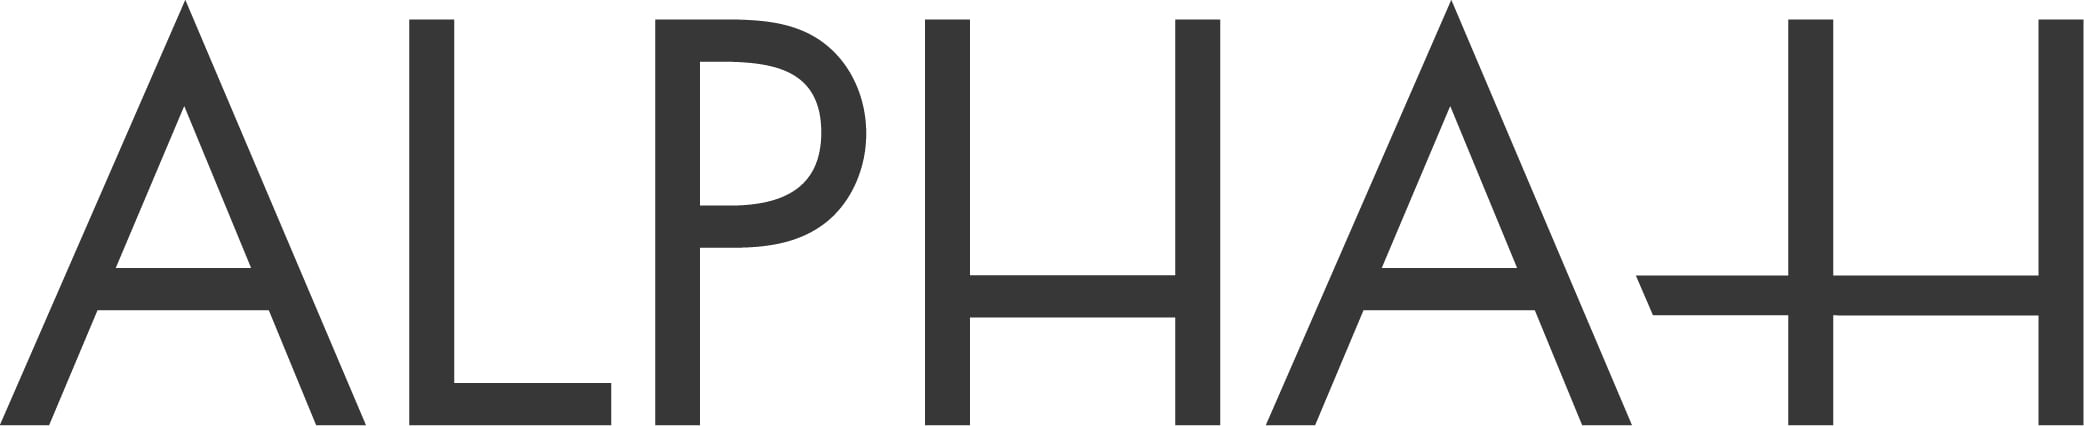 Alpha-H Australia logo